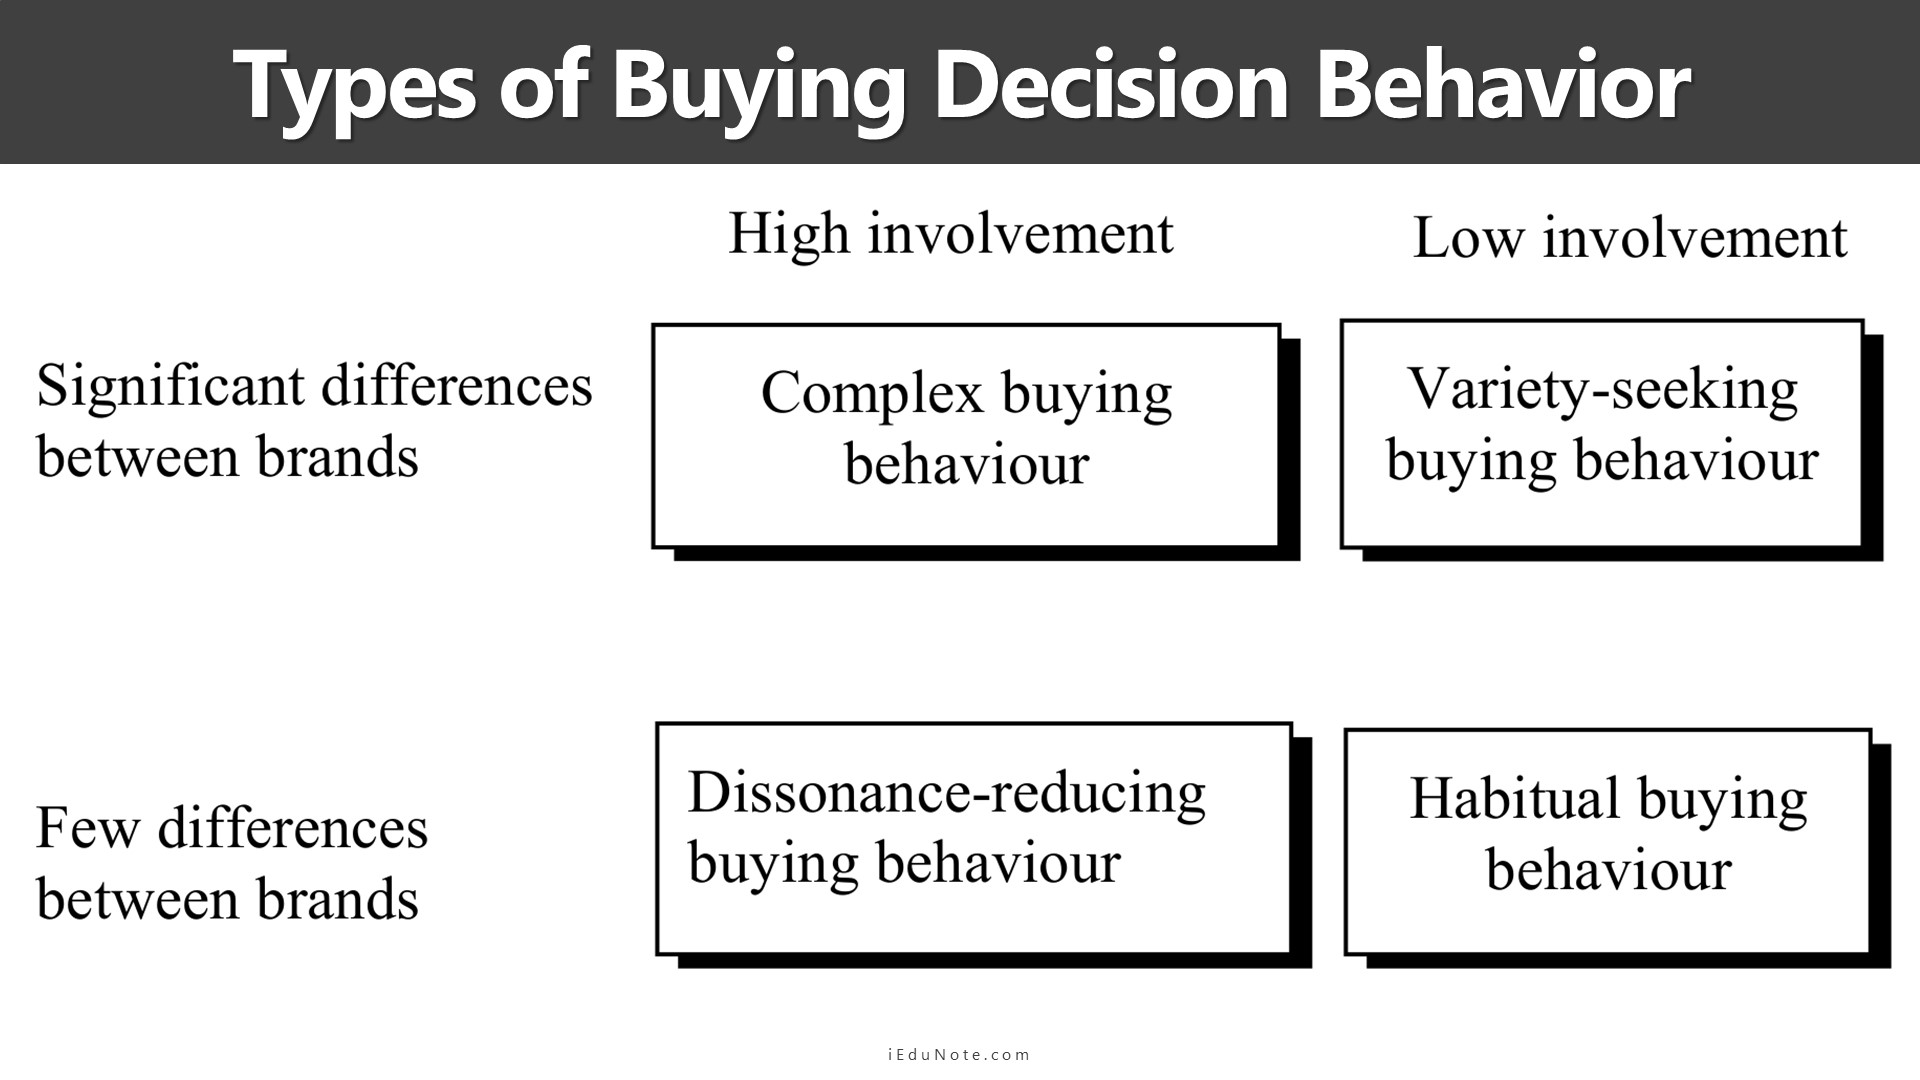 Types of Buying Decision Behavior